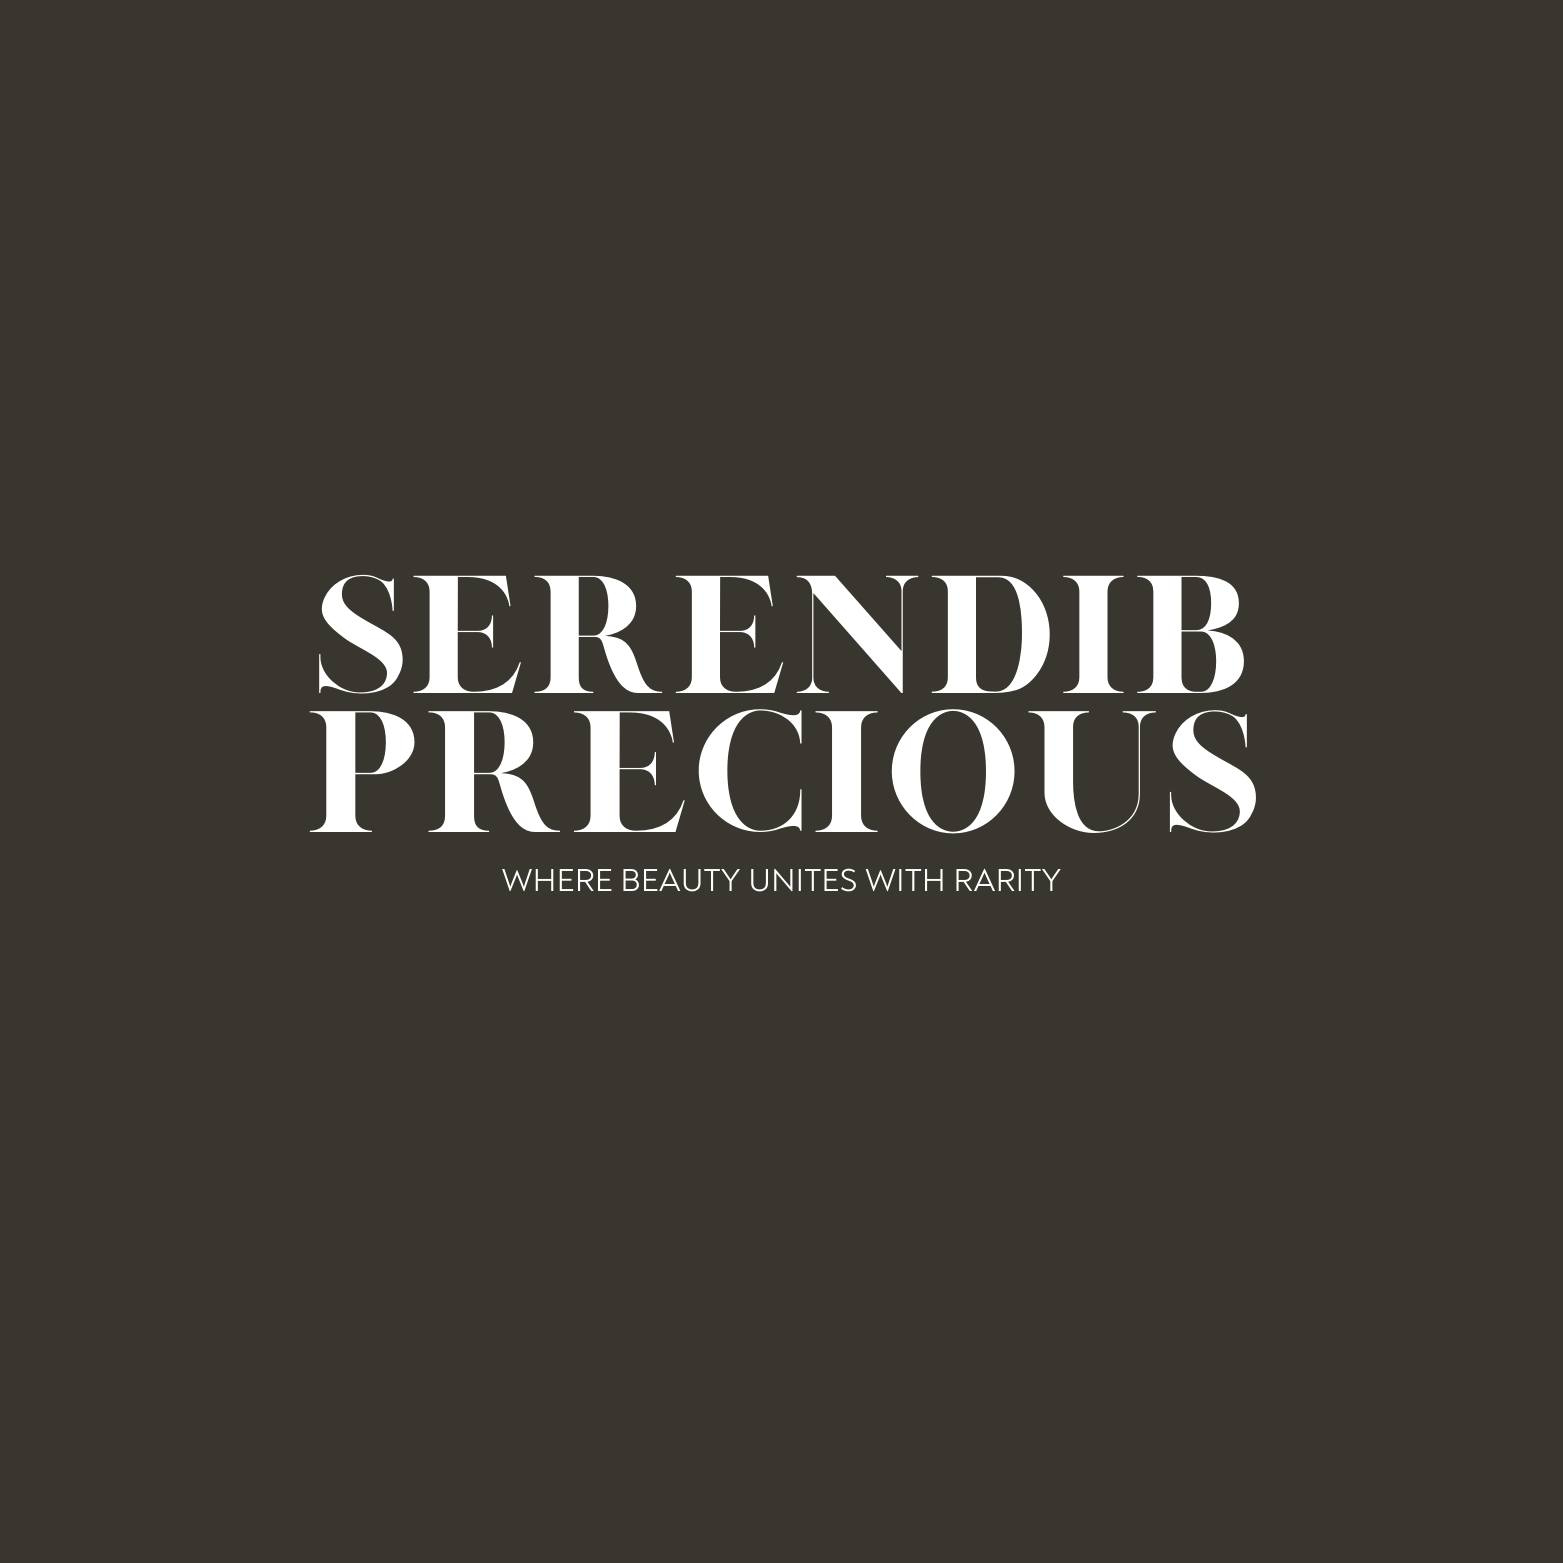 Serendib Precious